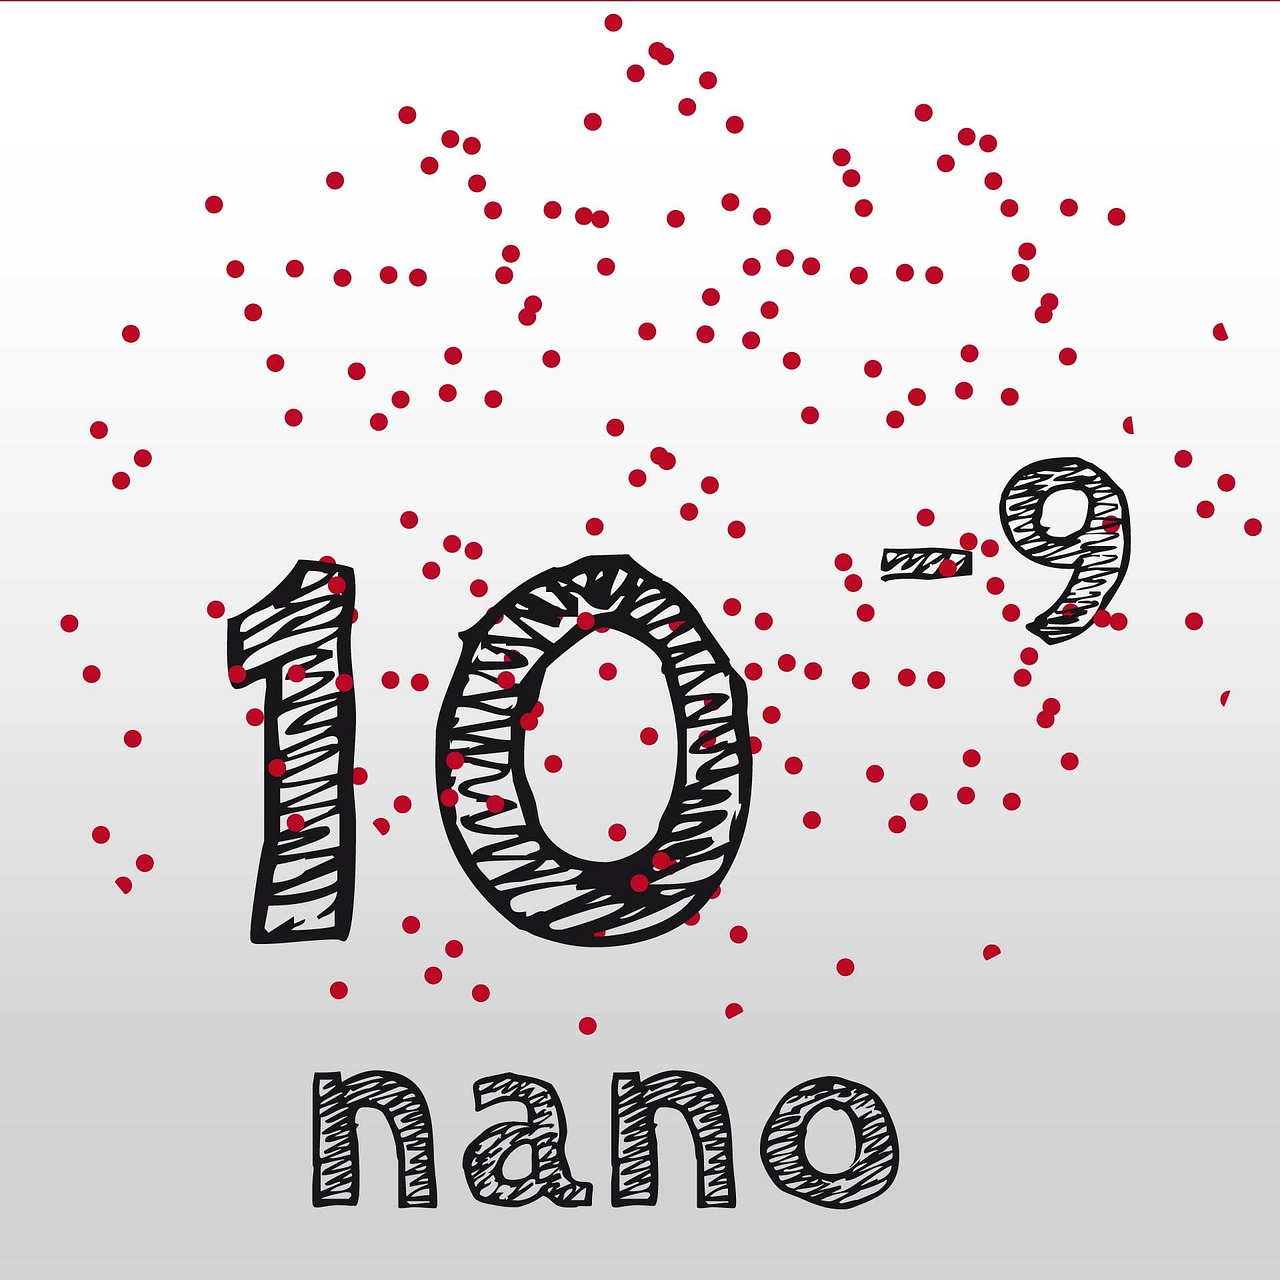 nano small particles free photo